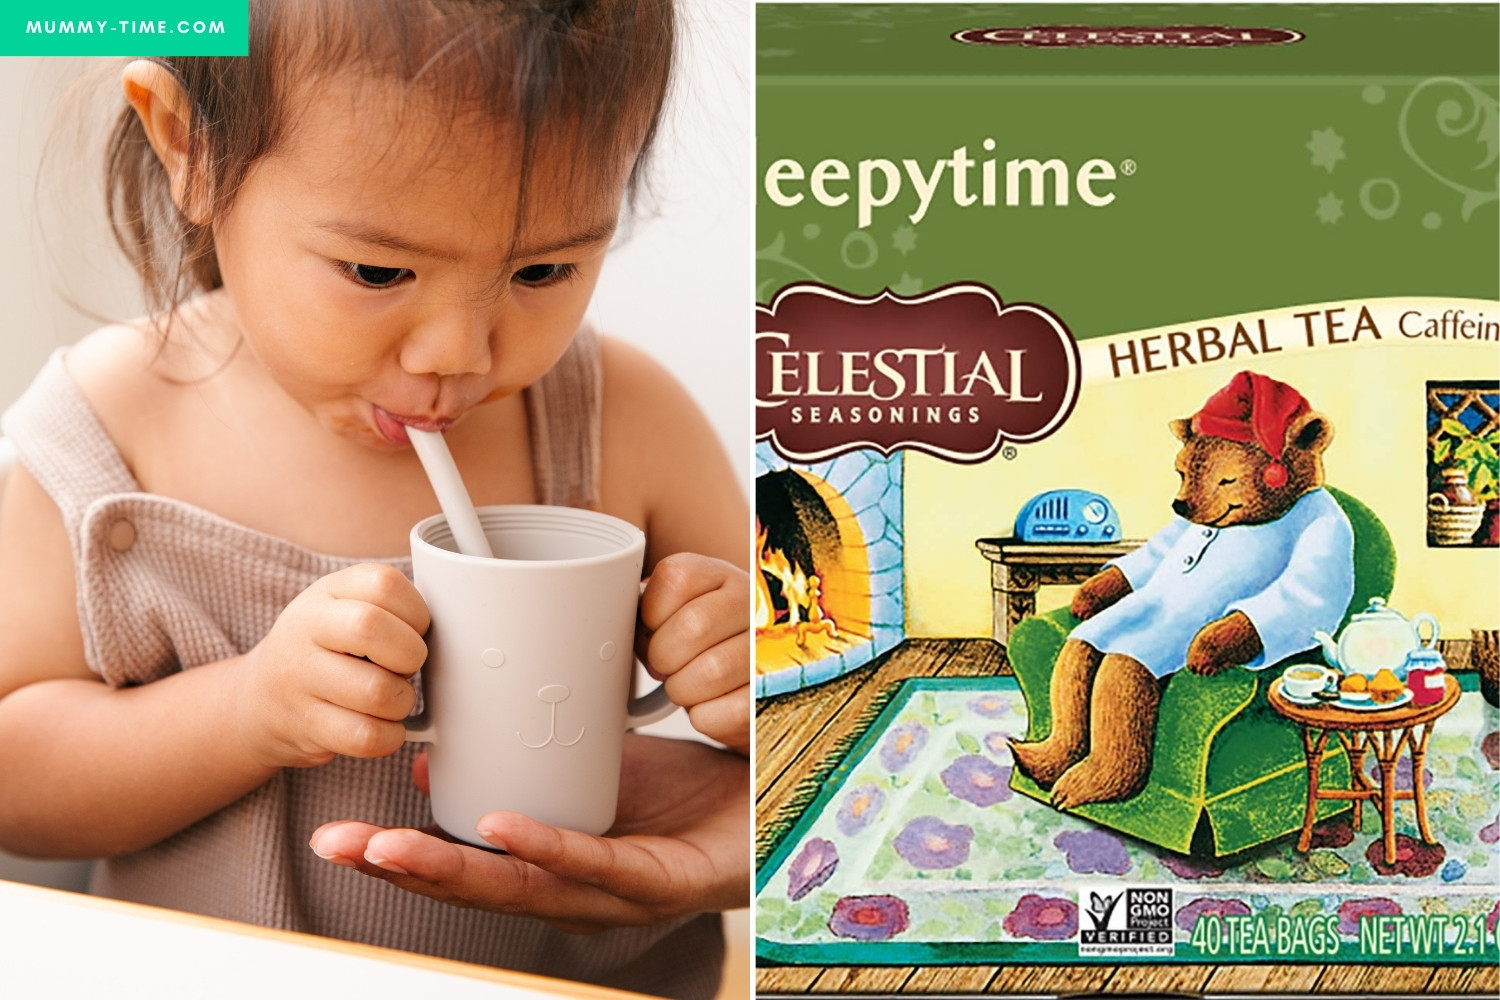 Can Kids Drink Sleepytime Tea